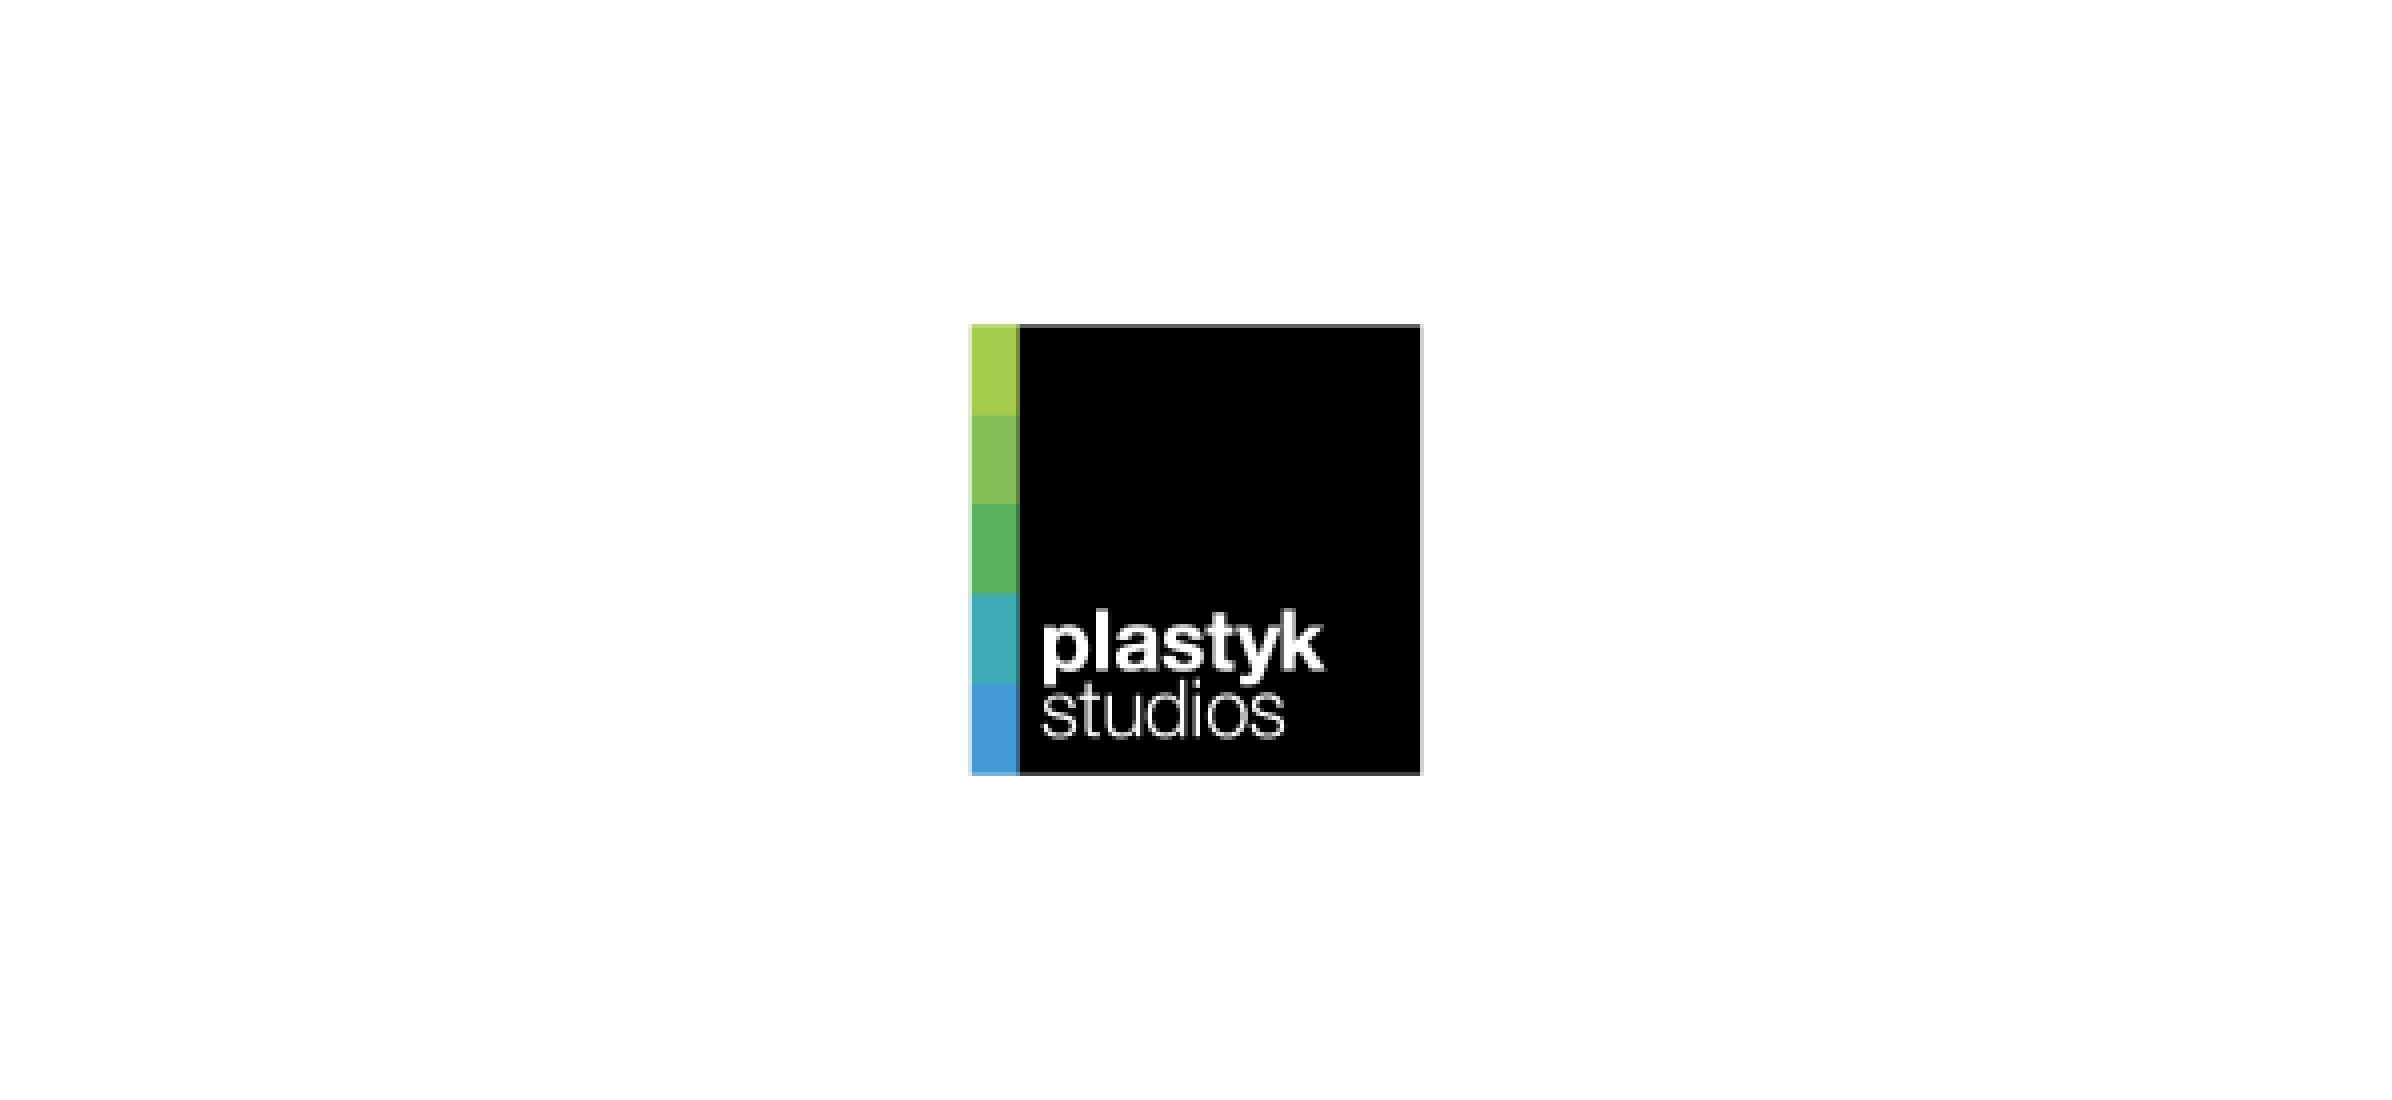 The Plastyk logo